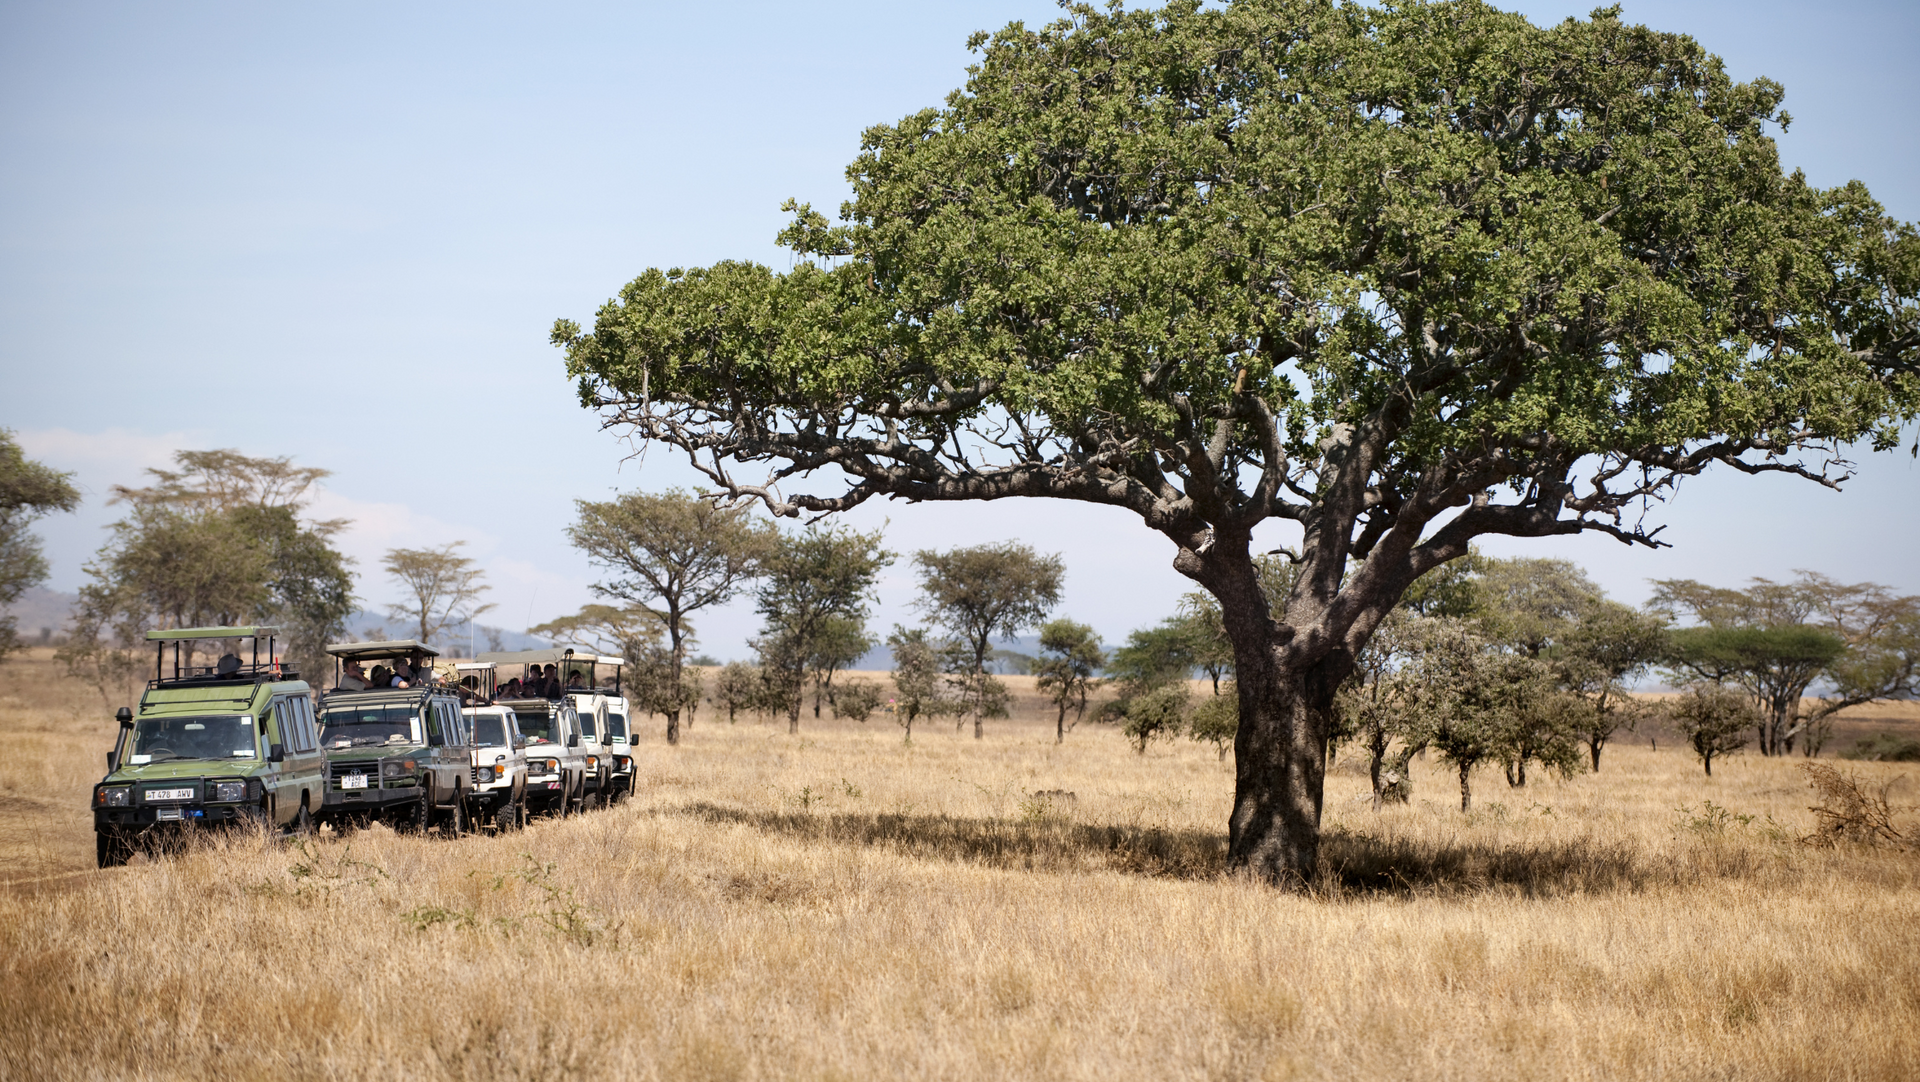 Noisy Safari vehicles surrounding an animal while polluting the air.